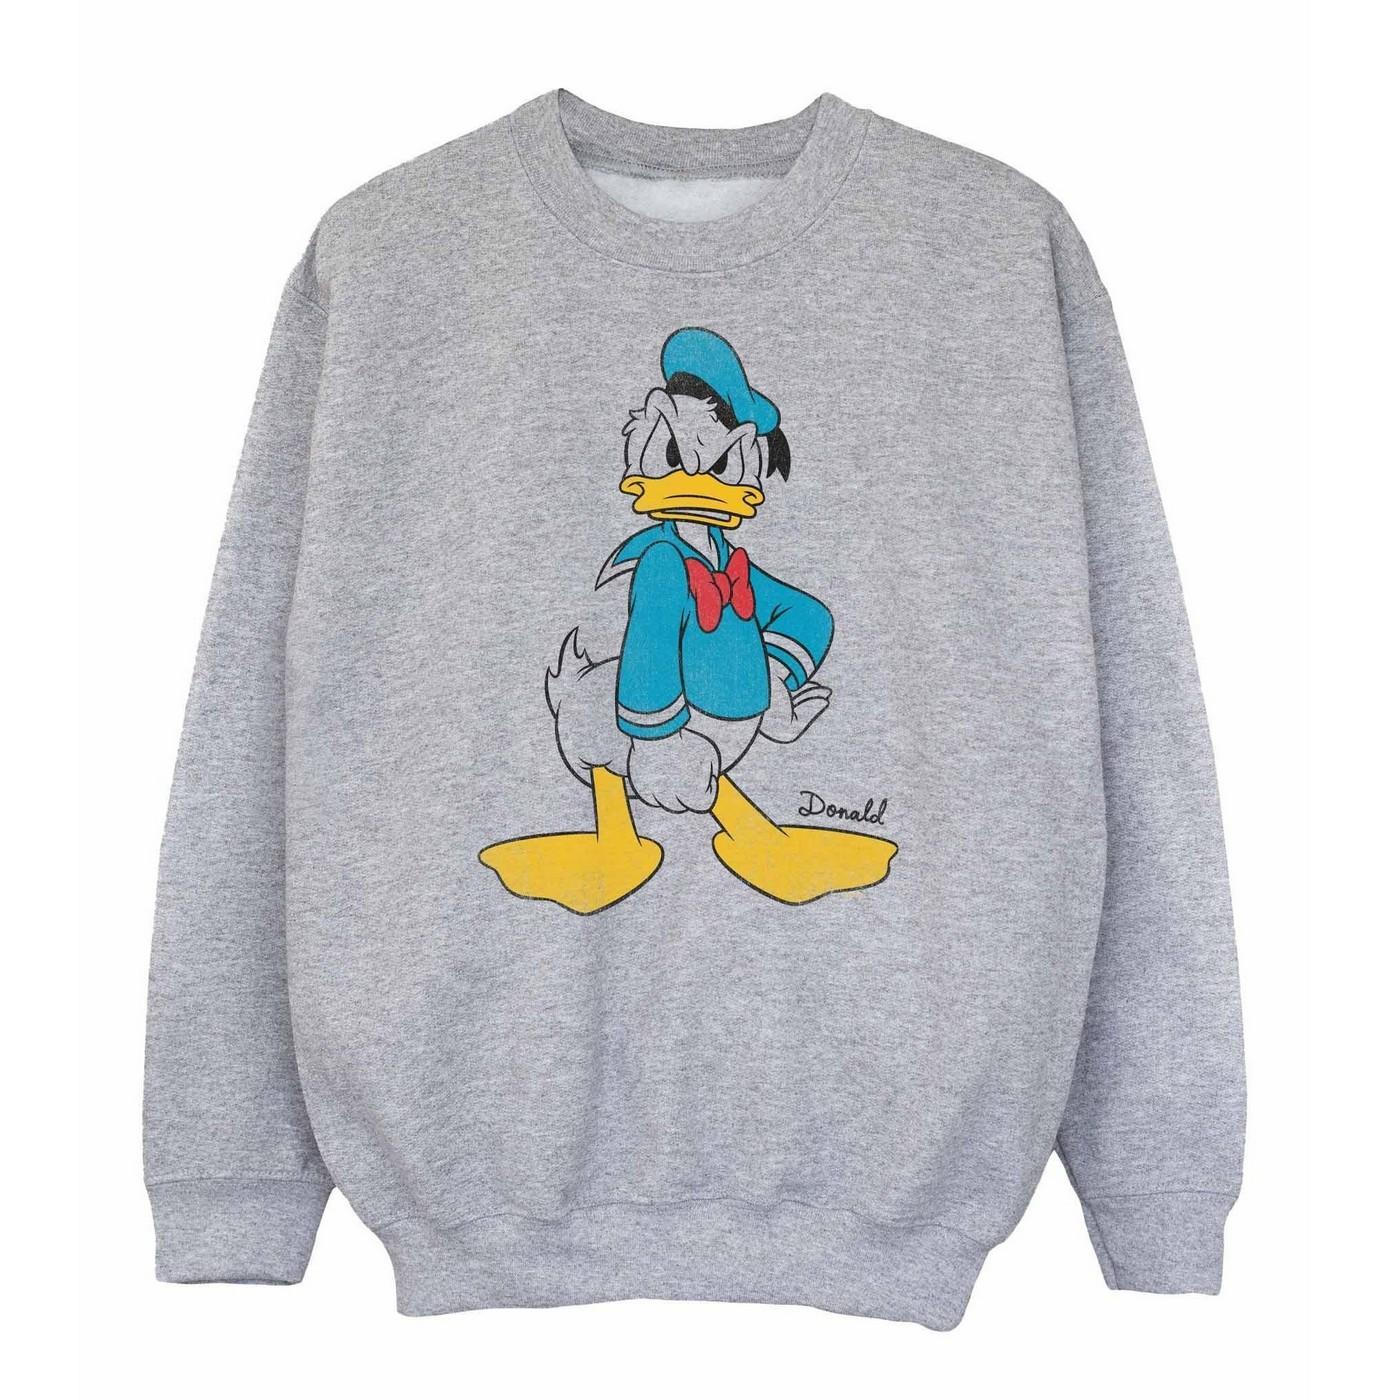 Disney Boys Angry Donald Duck Sweatshirt (Sports Grey) (9-11 Years)